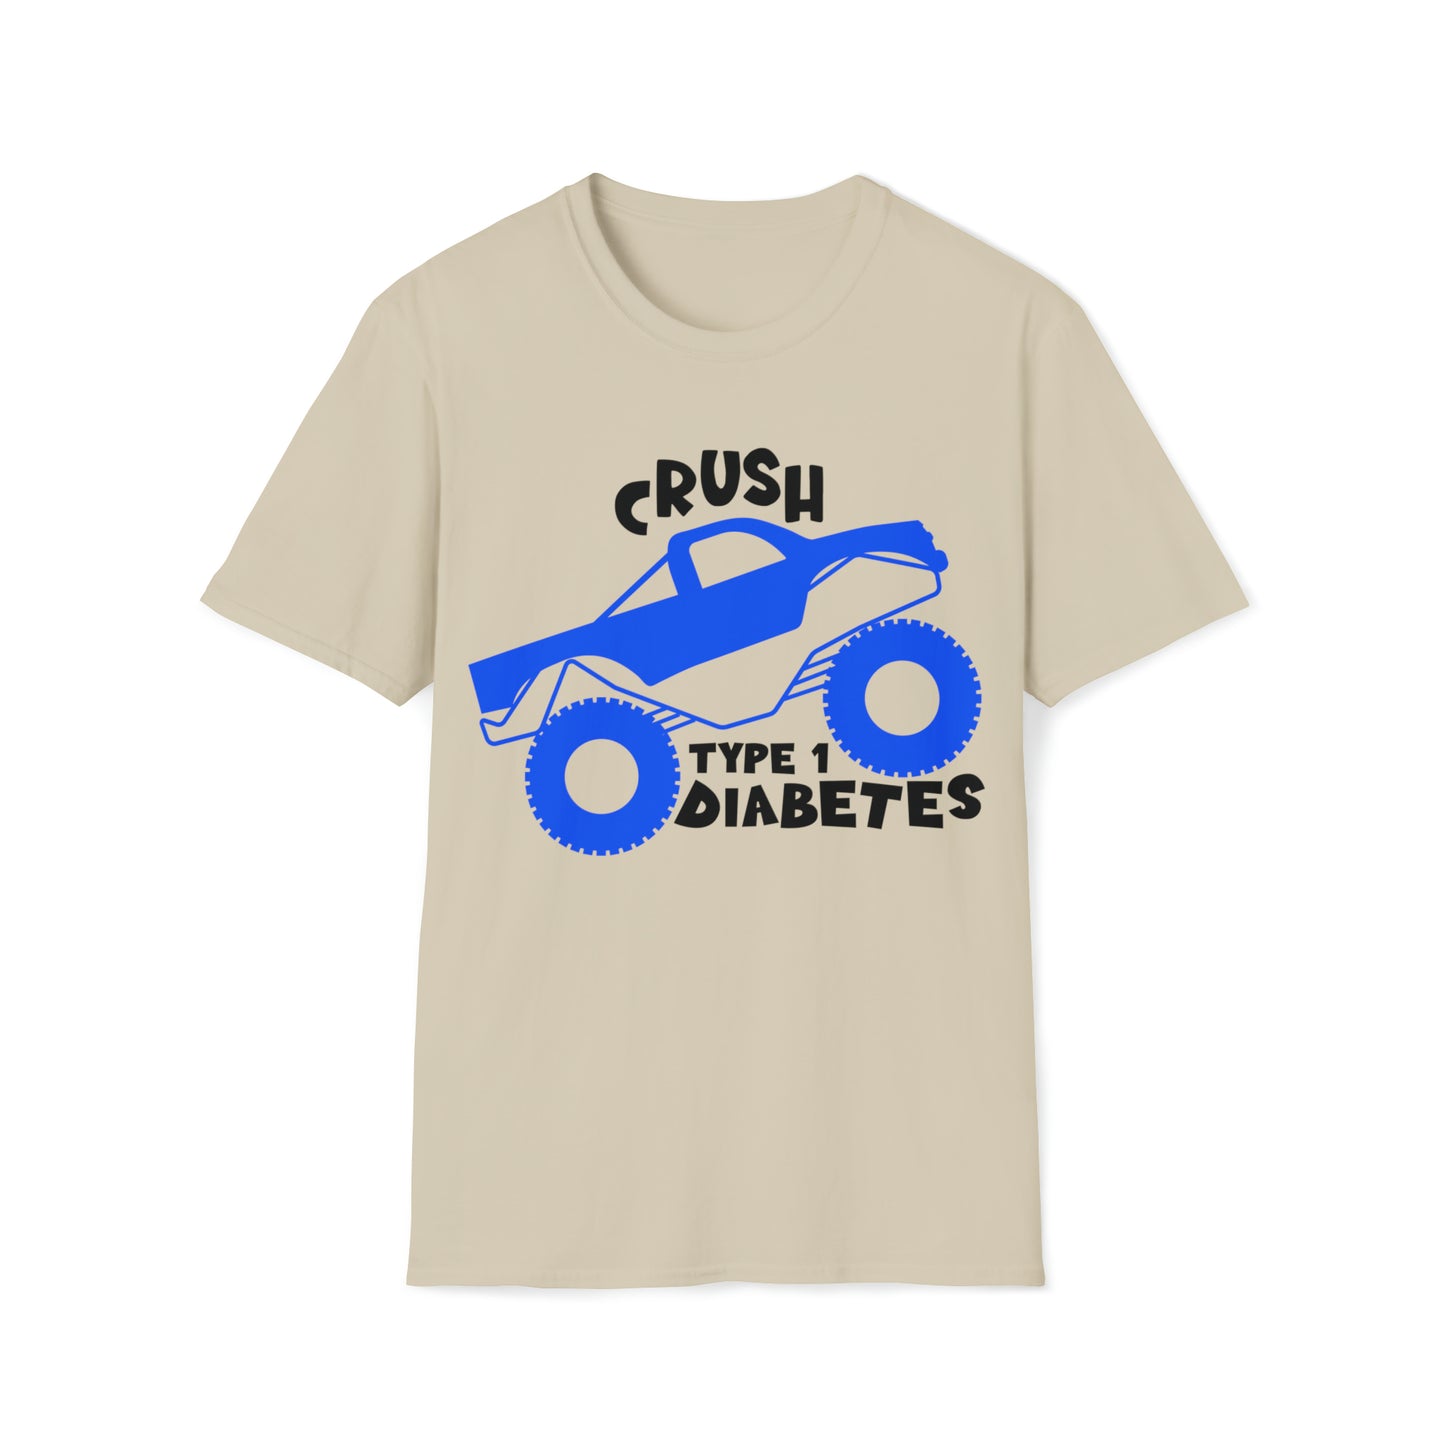 Crush Diabetes Awareness Shirt